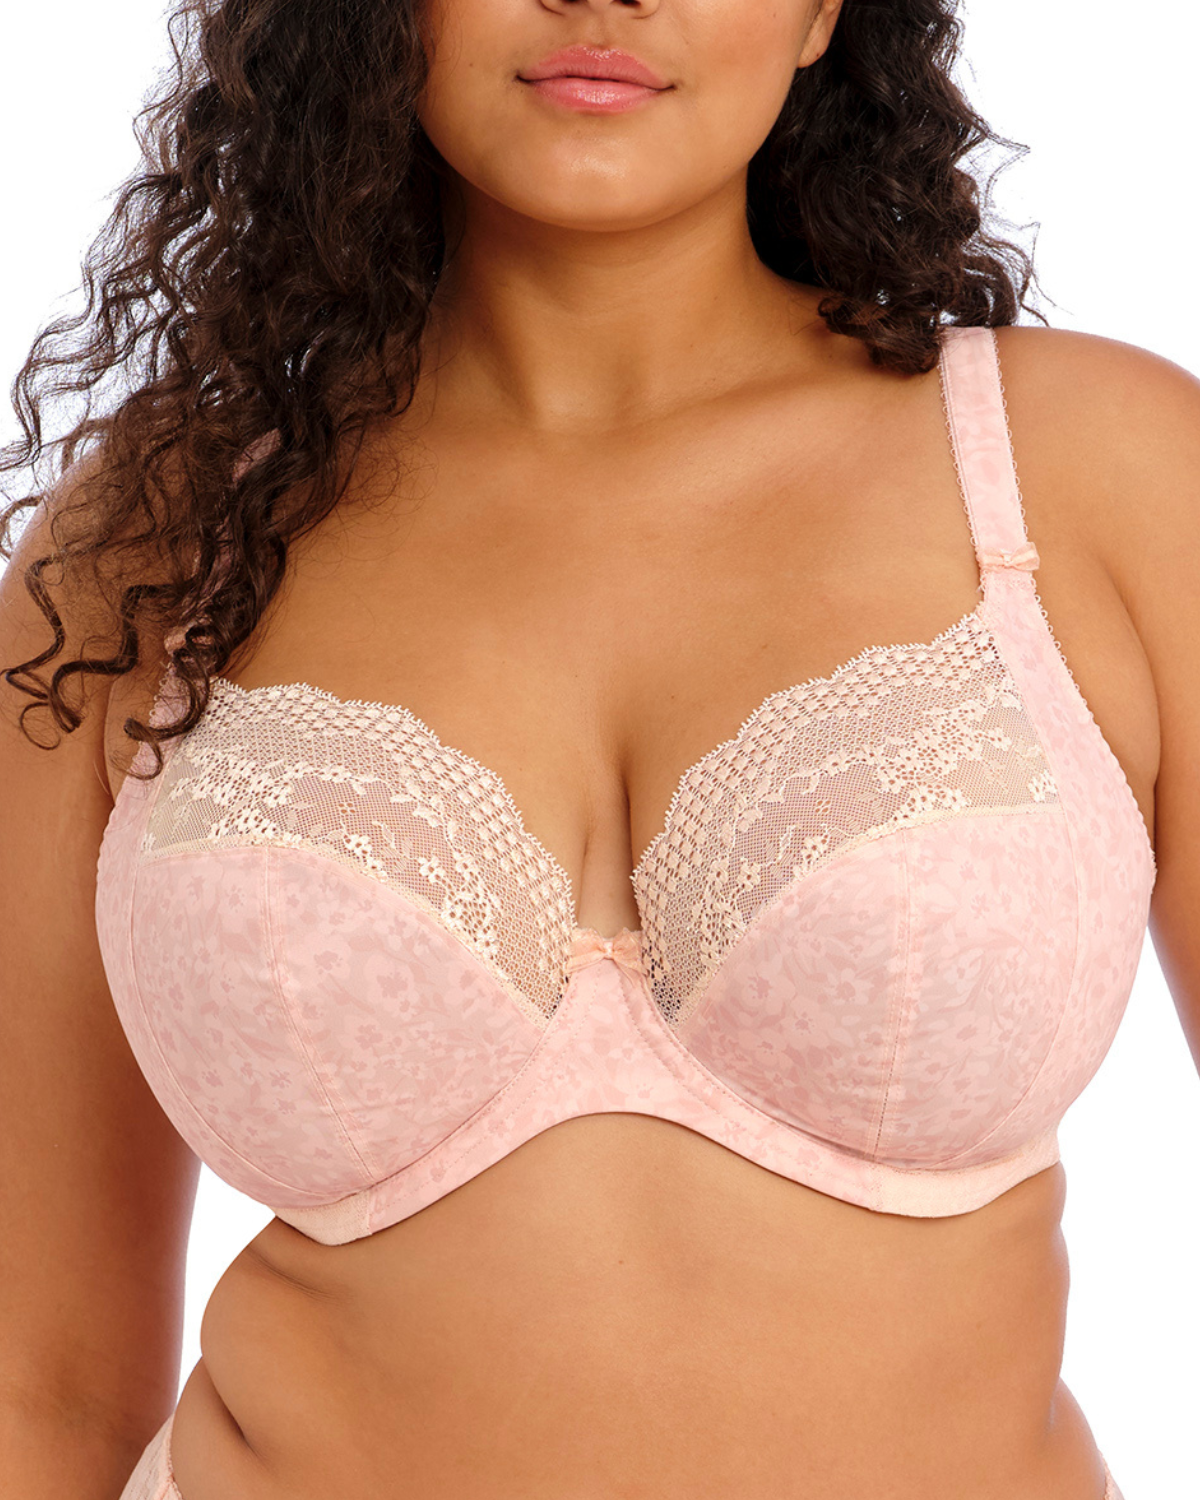 Model wearing a stretch plunge bra in pink